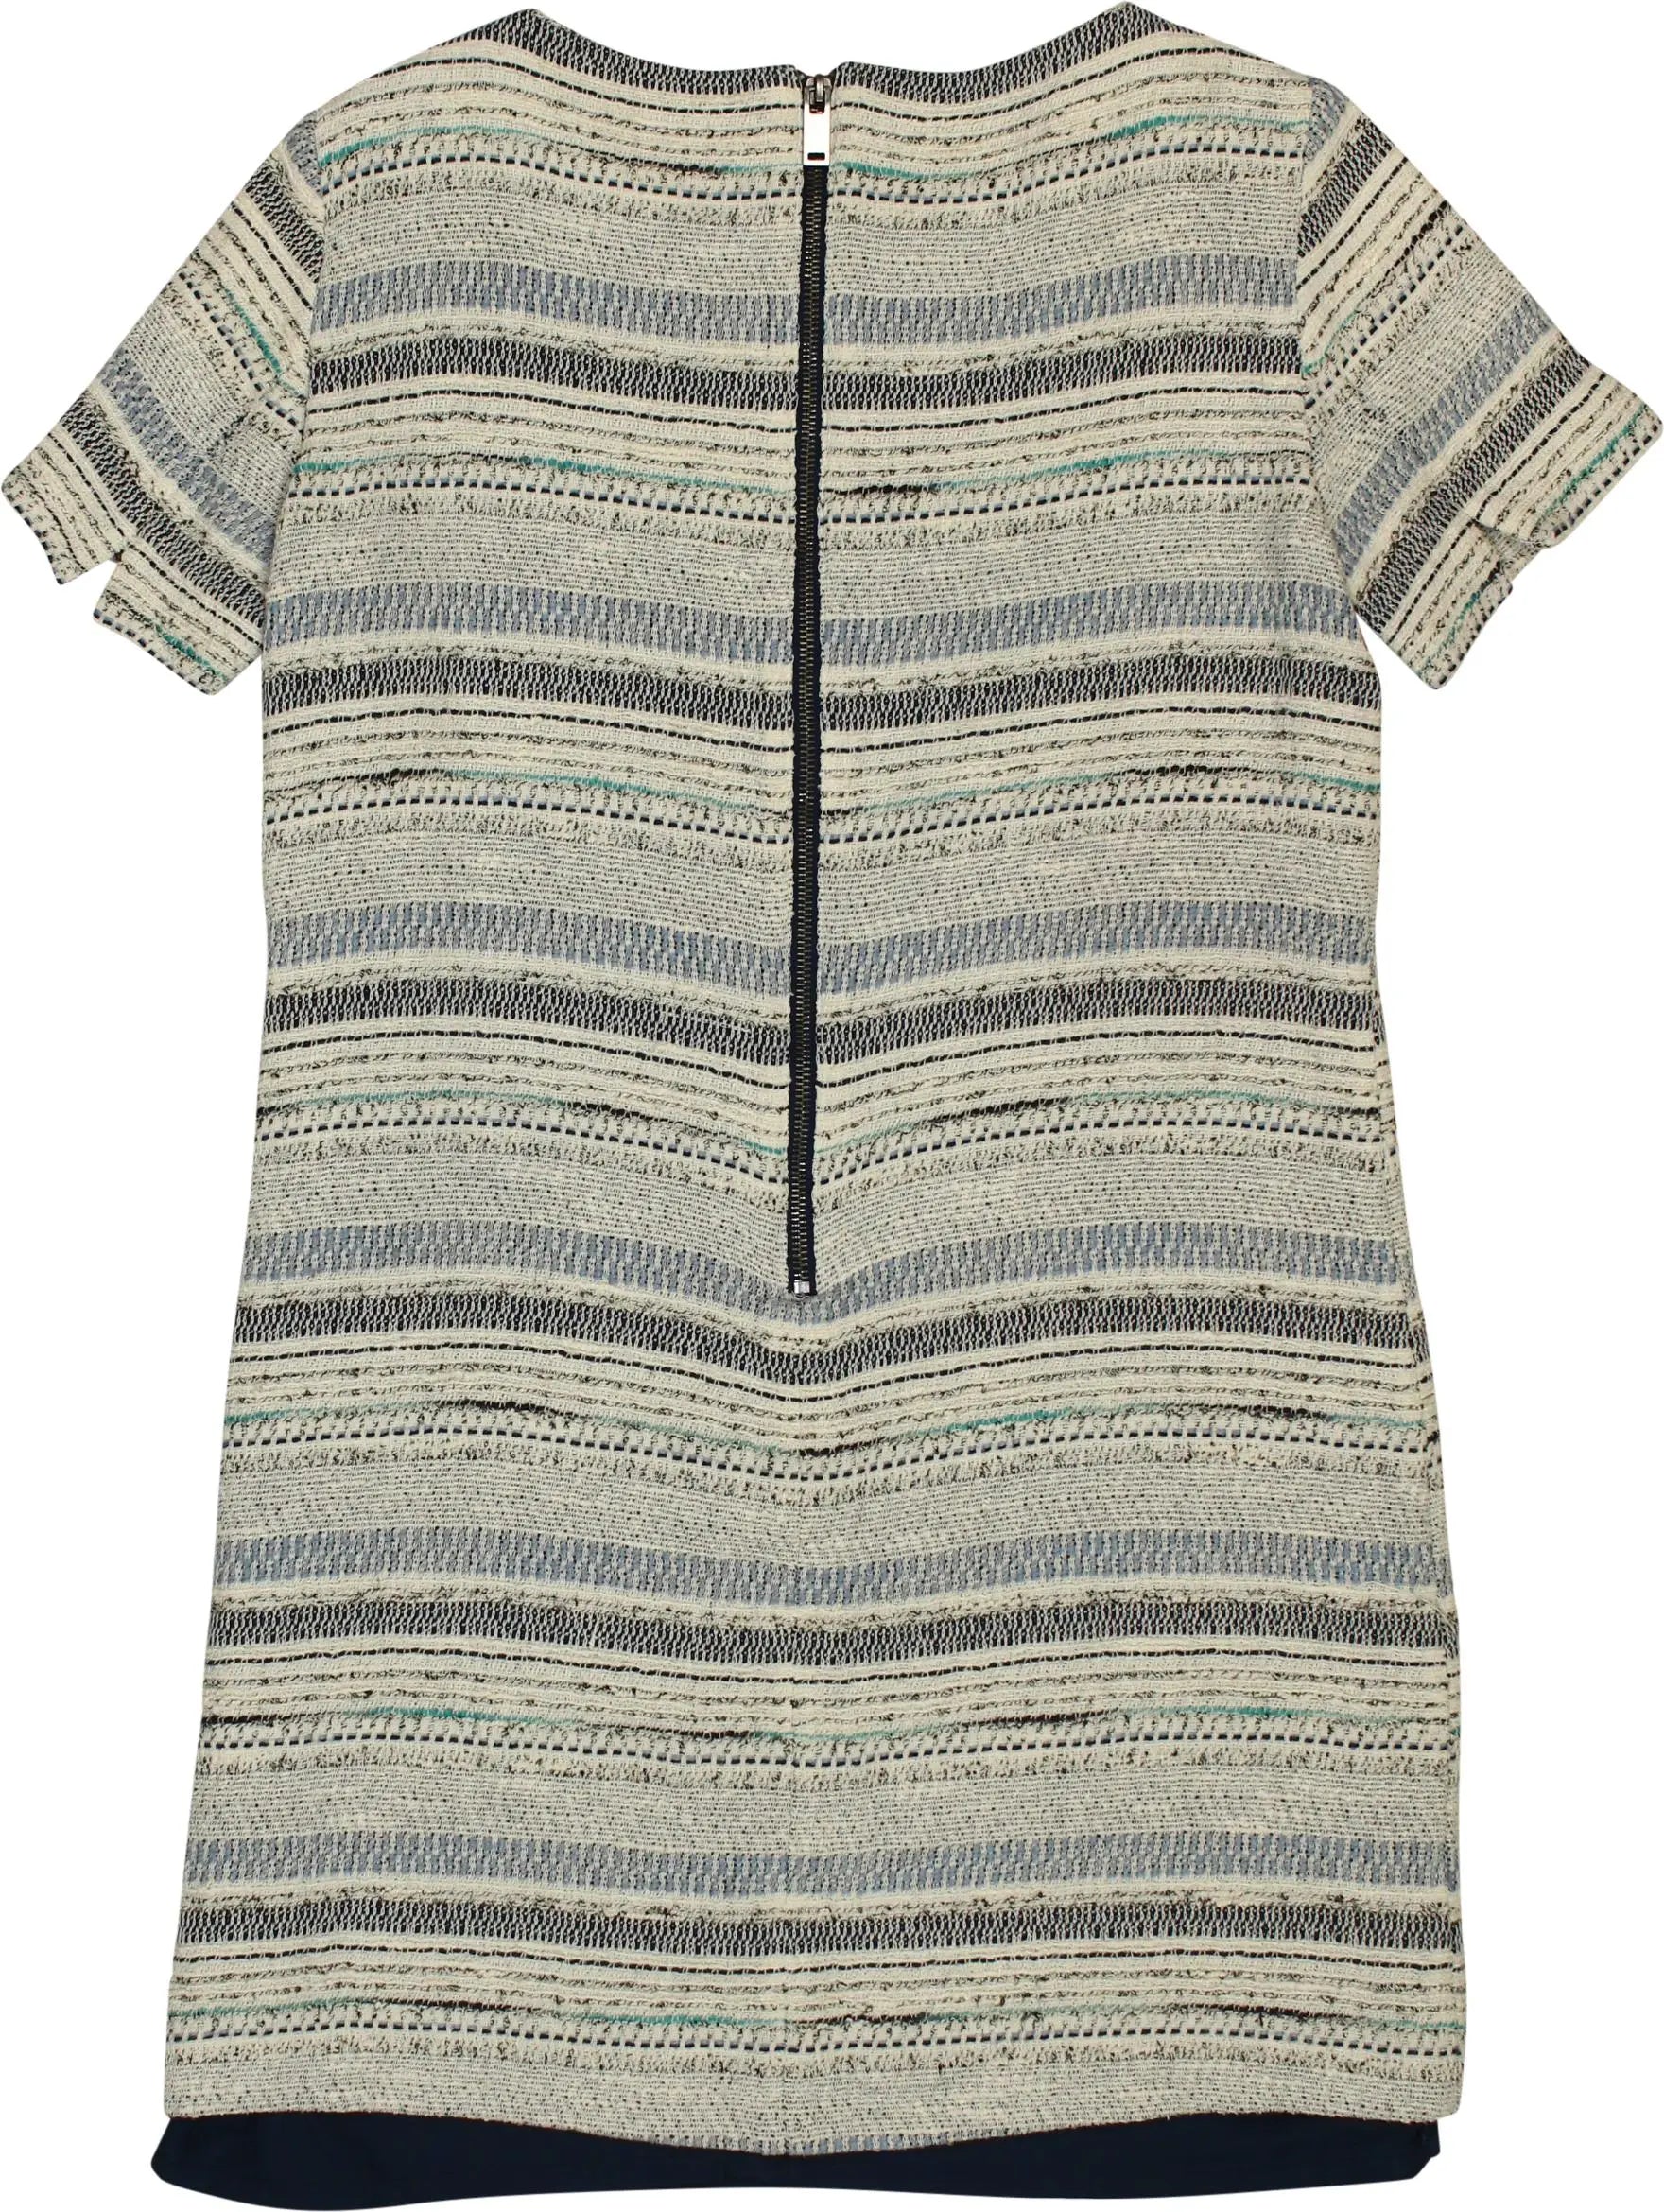 Esprit - Dress- ThriftTale.com - Vintage and second handclothing